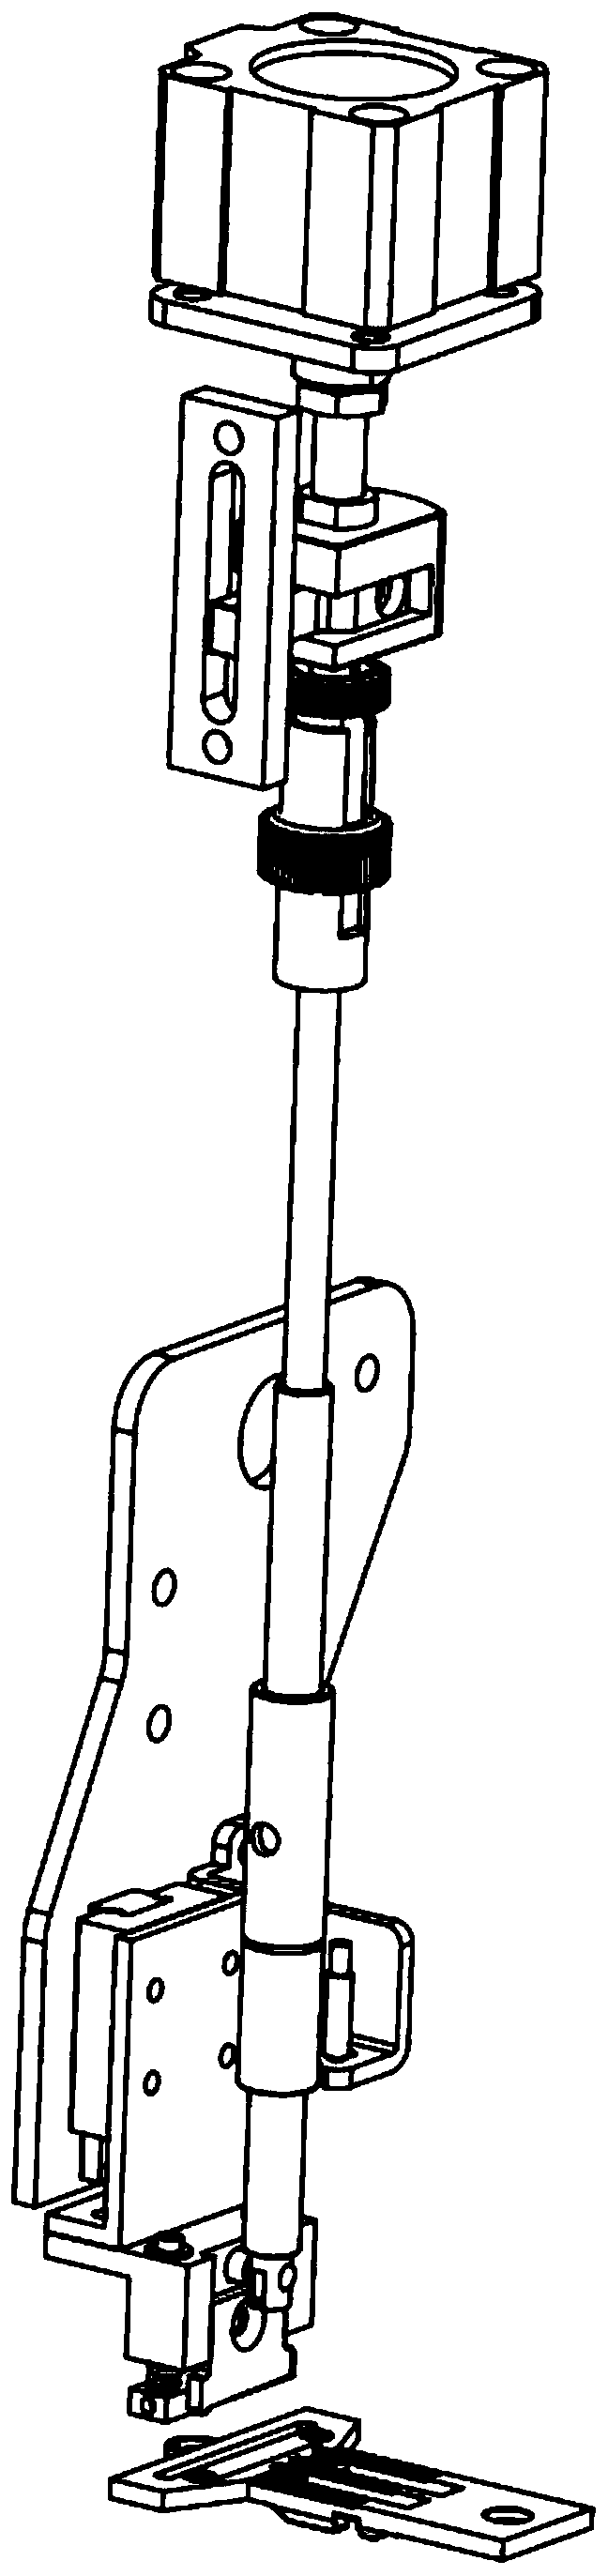 Rear belt cutting device of double-needle lockstitch sewing machine